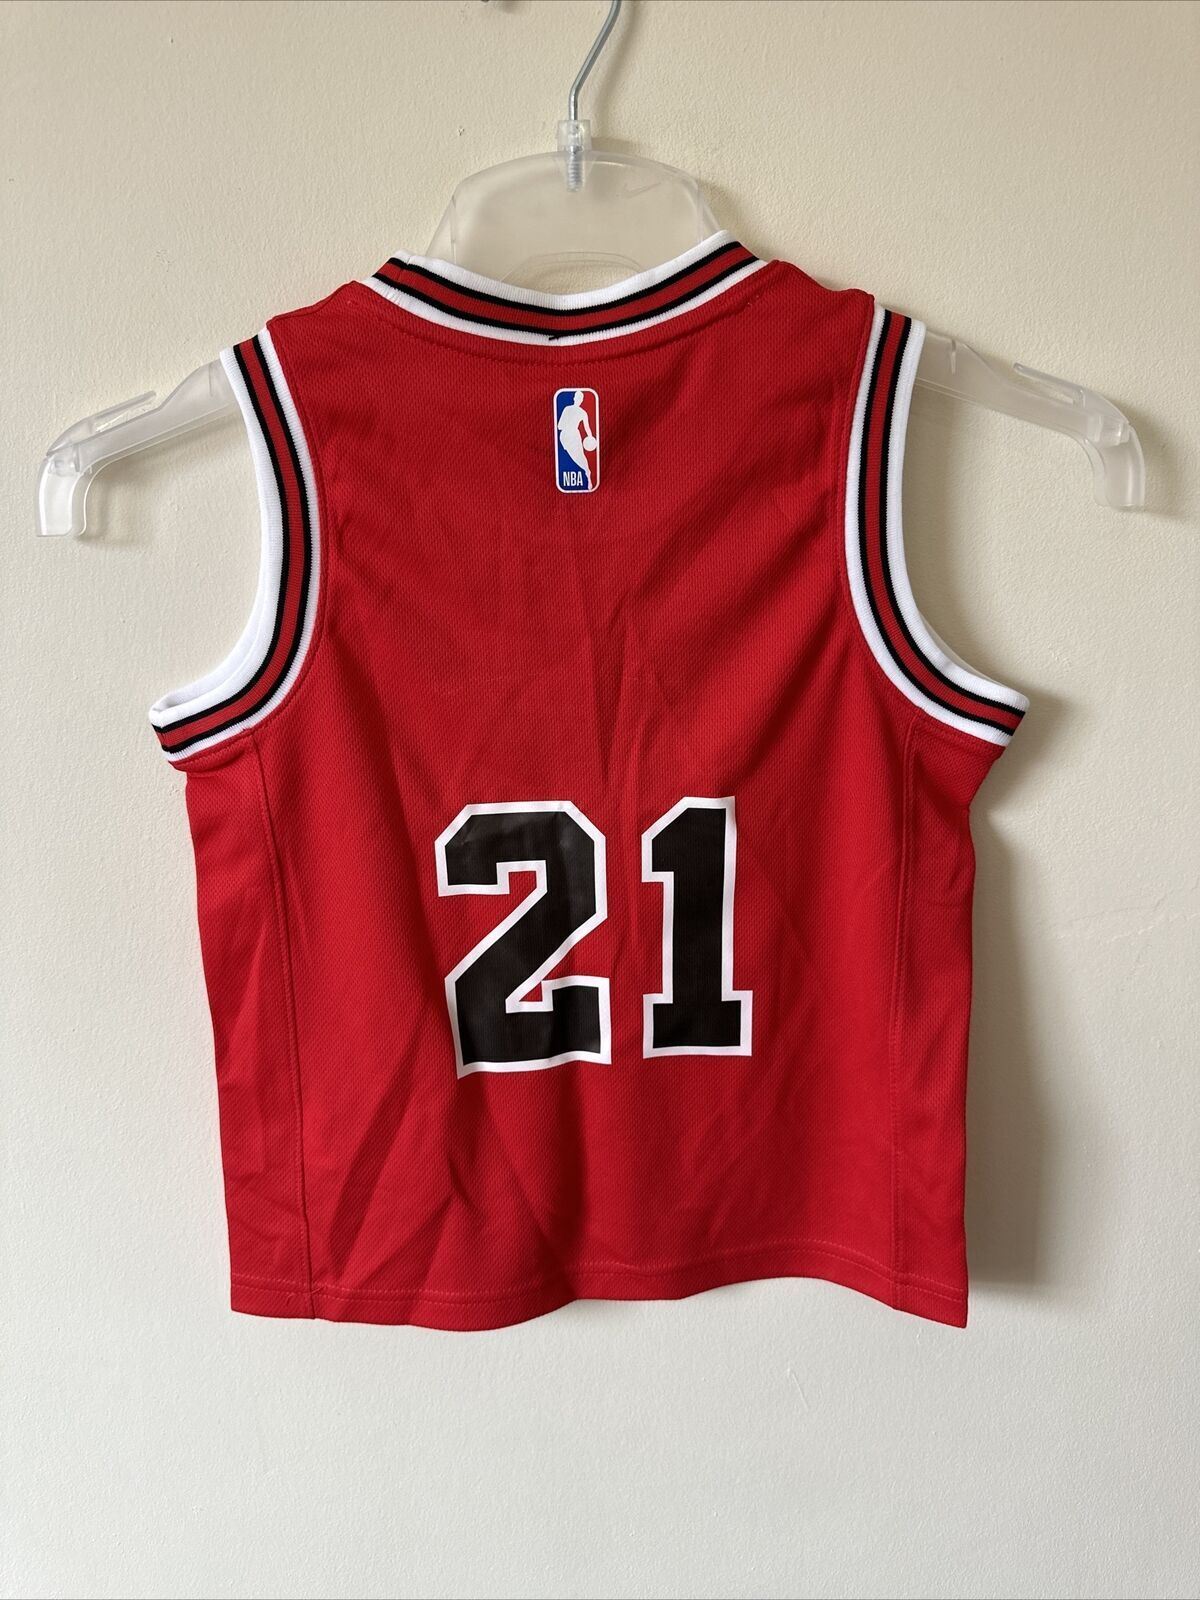 Nike NBA Chicago Bulls Swingman Jersey ‘21’ Basketball Youth 4-5 Years